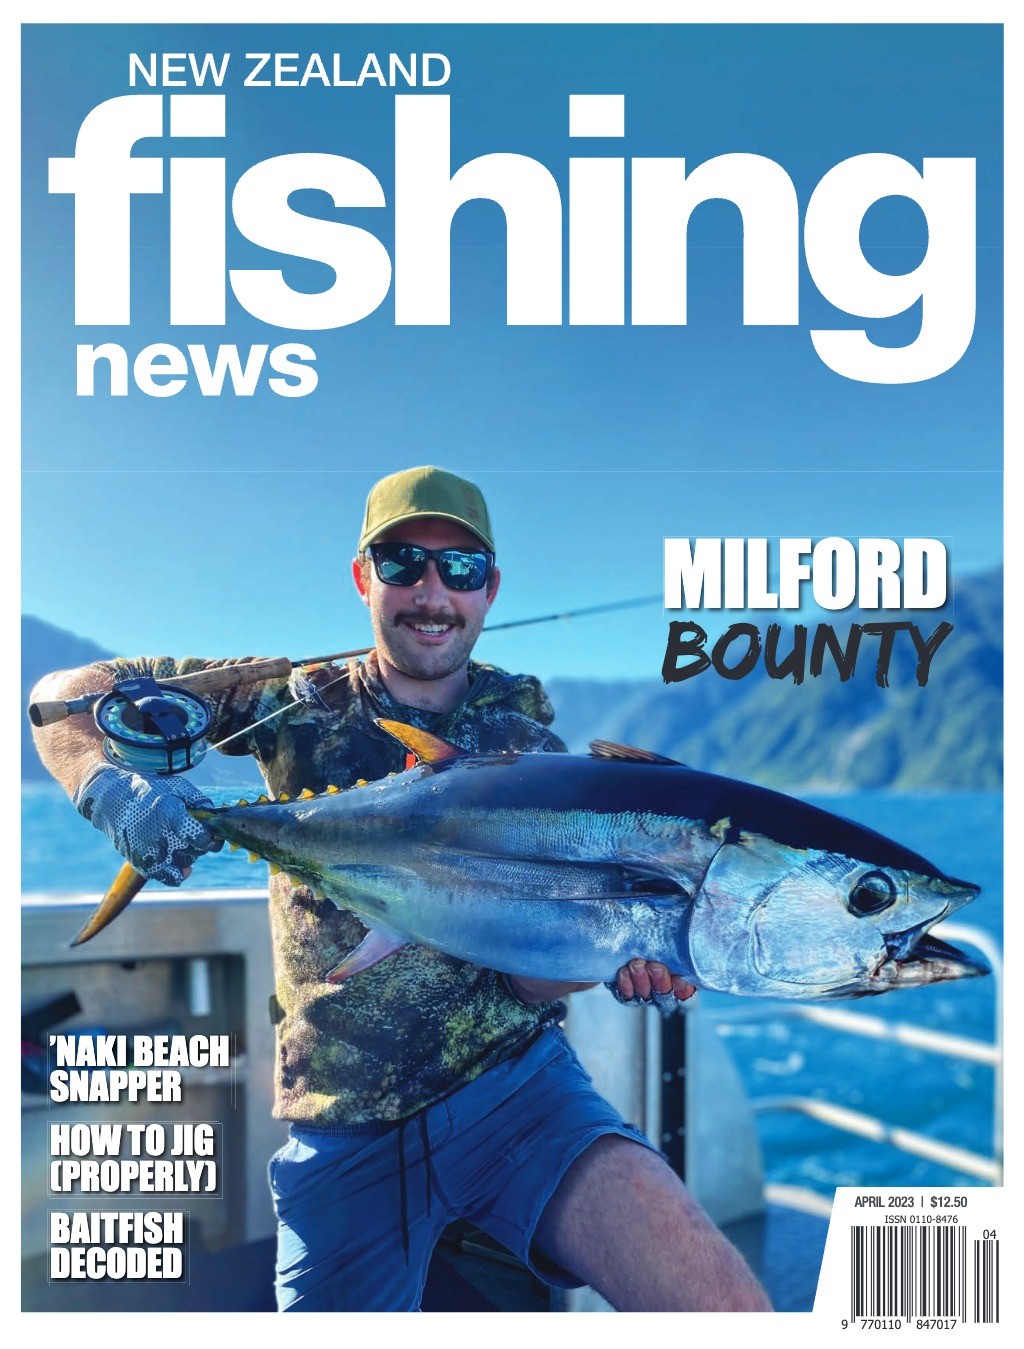 New Zealand Fishing News - Home